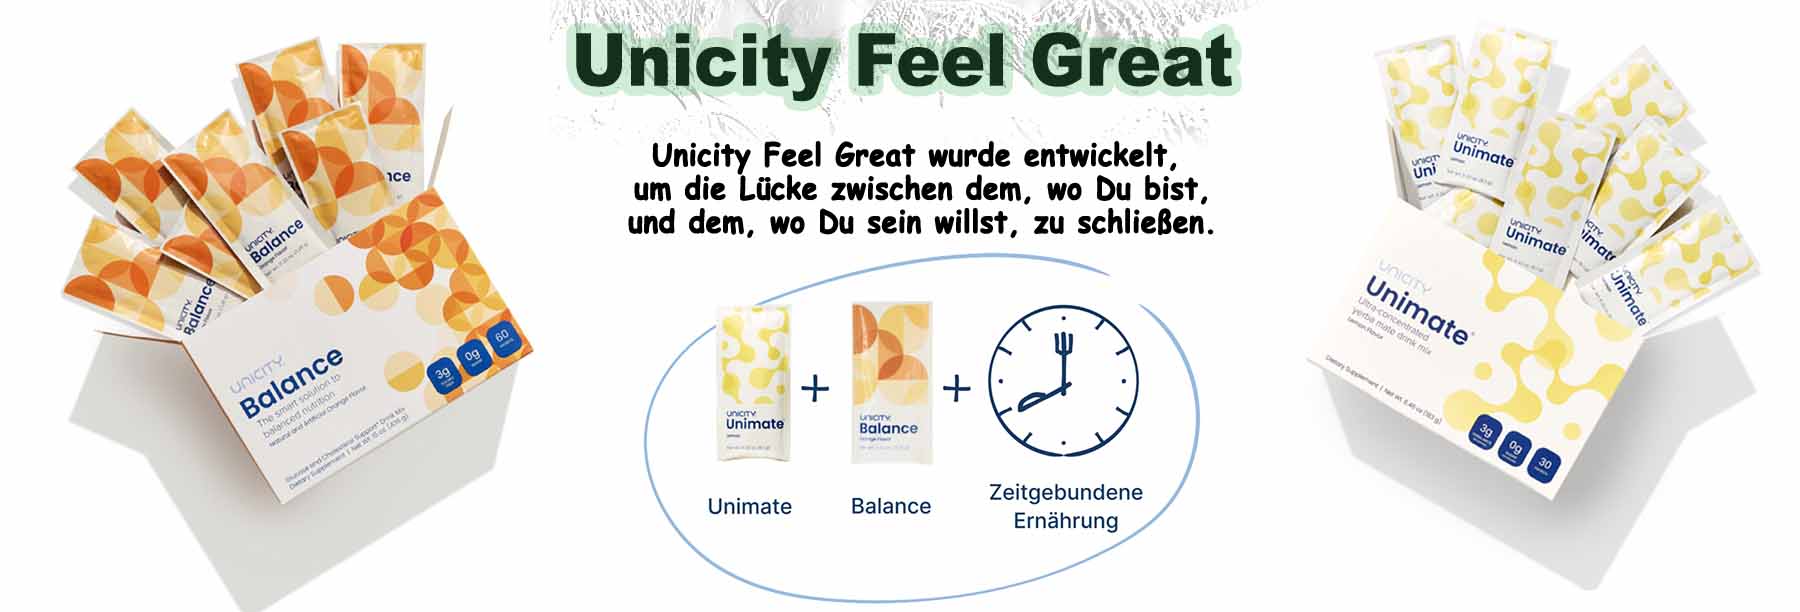 Unicity_Feel_Great